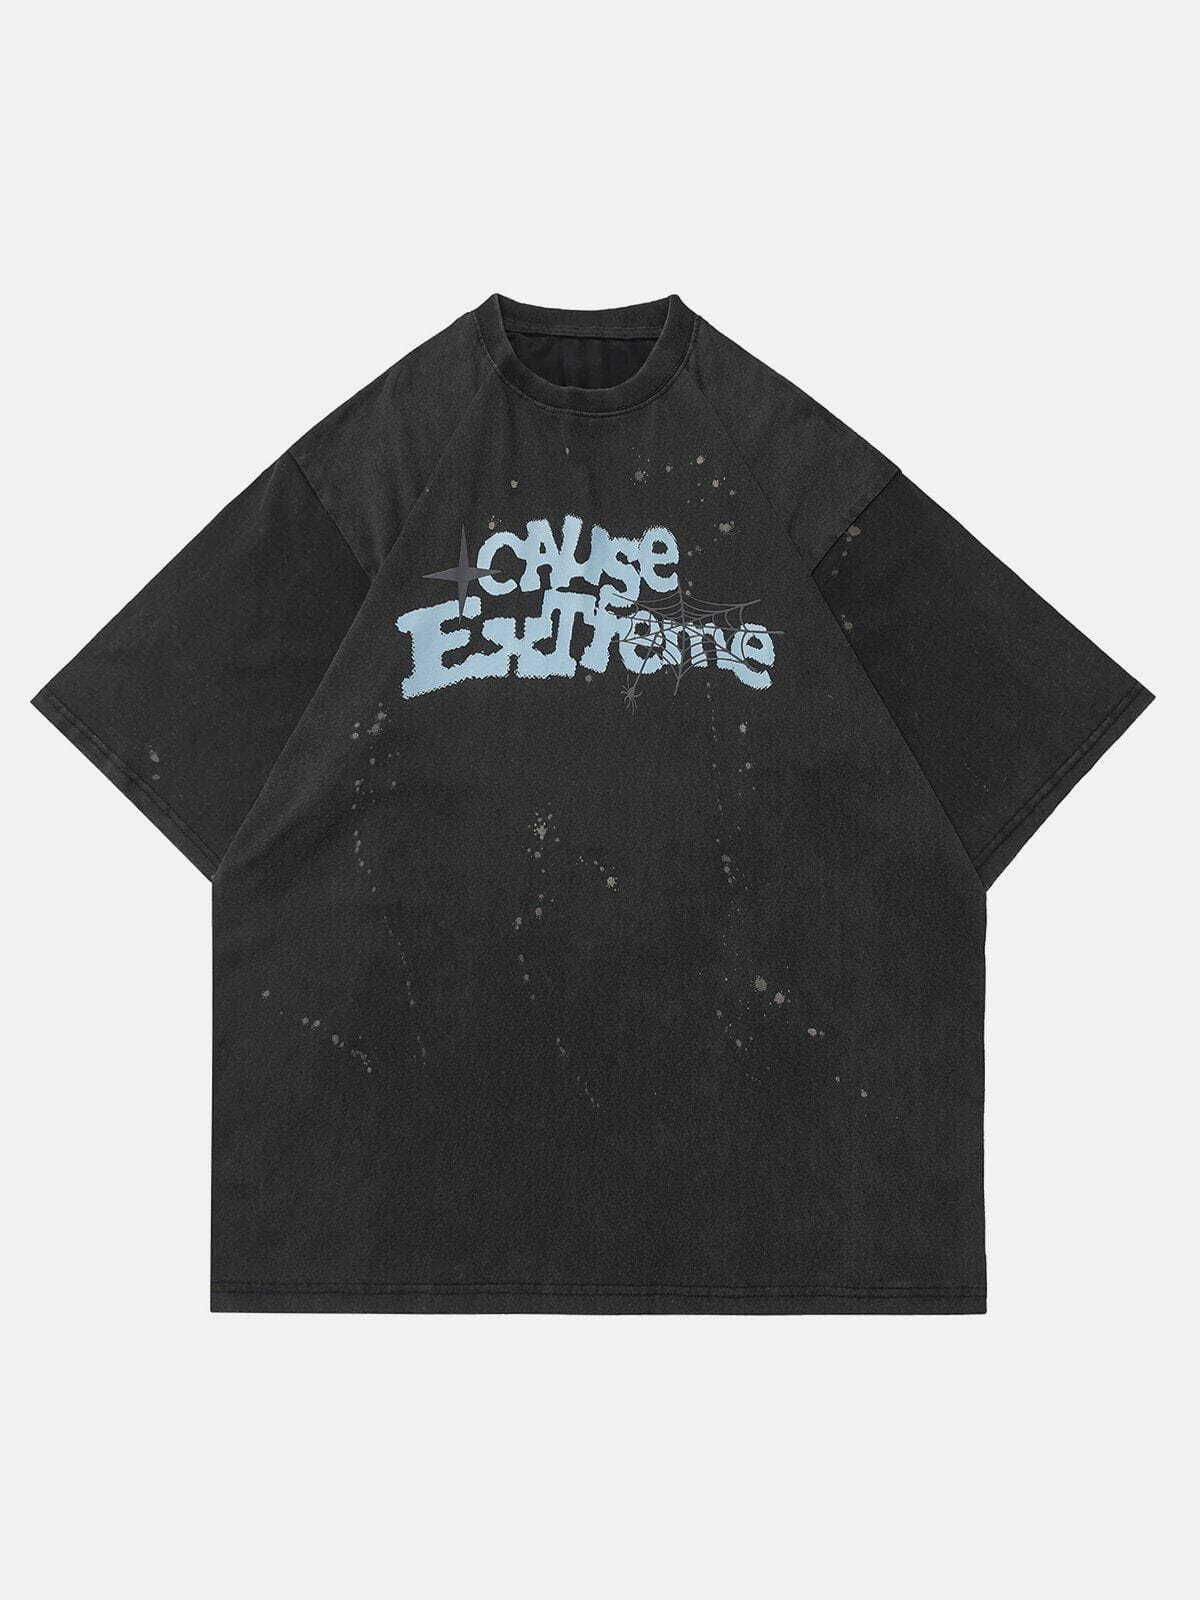 spider web graphic tshirt edgy retro streetwear essential 6620